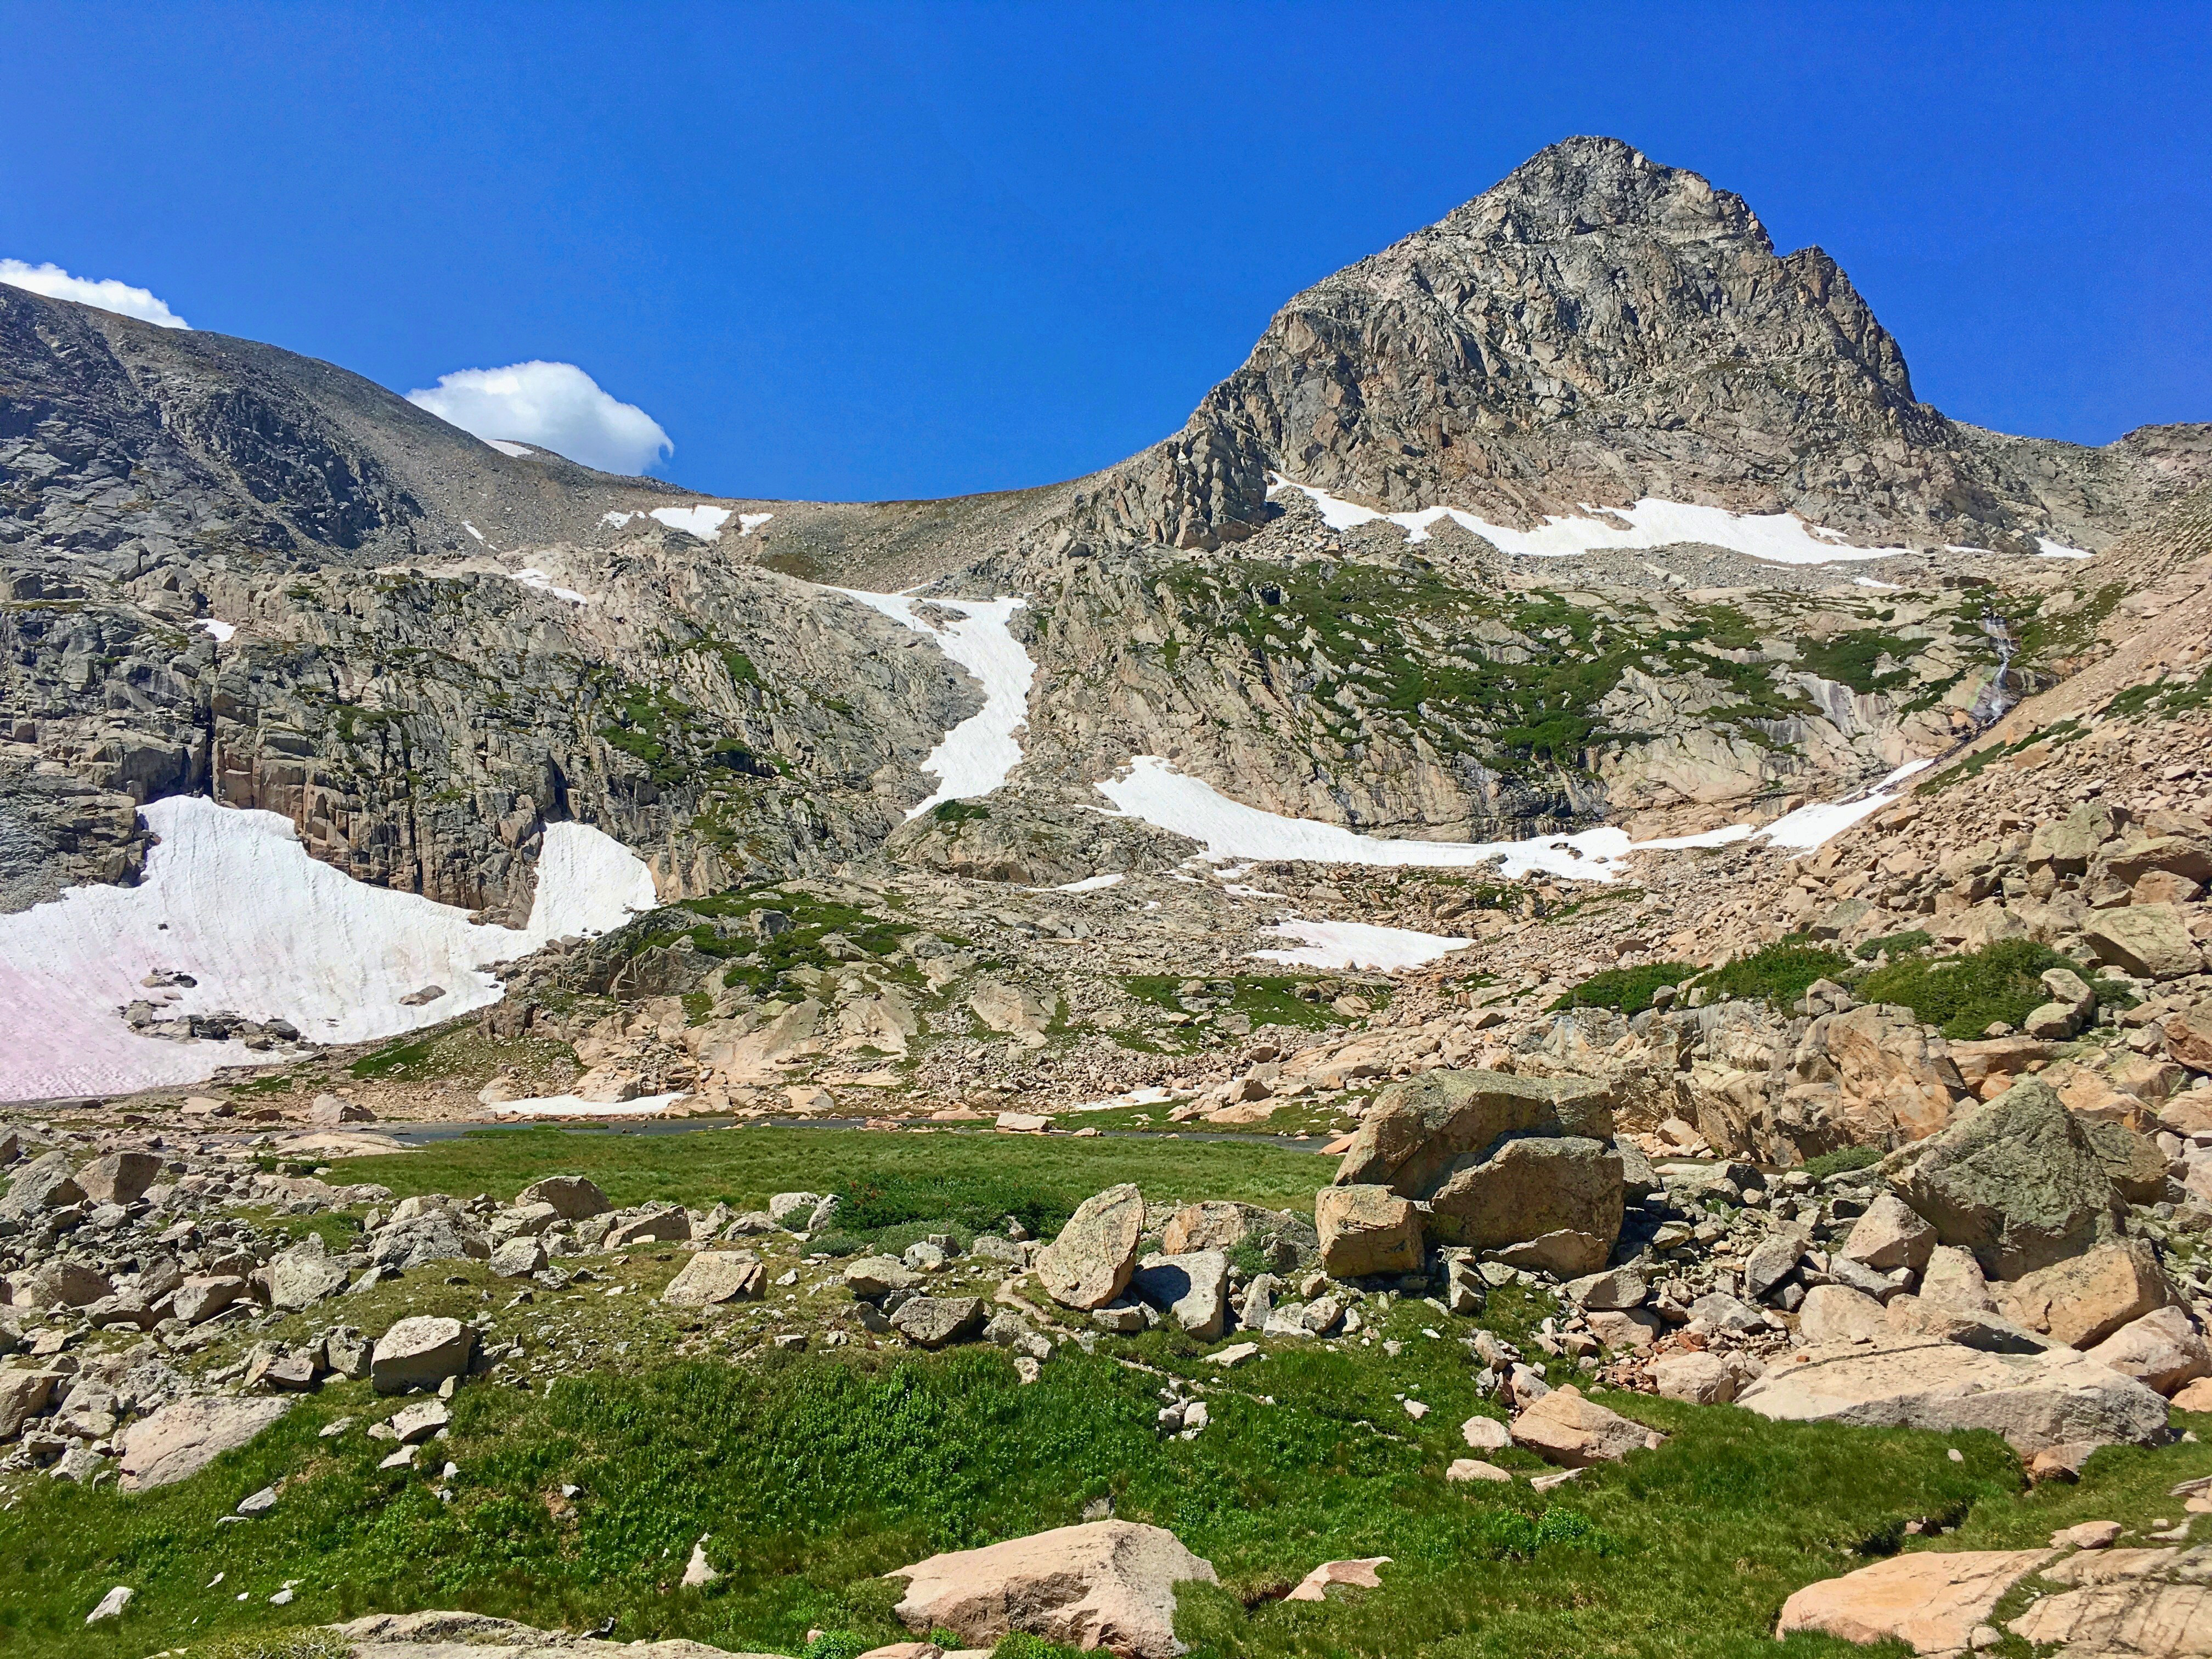 2017 - Mount Toll, Indian Peaks Wilderness, Colorado. August, 2017.